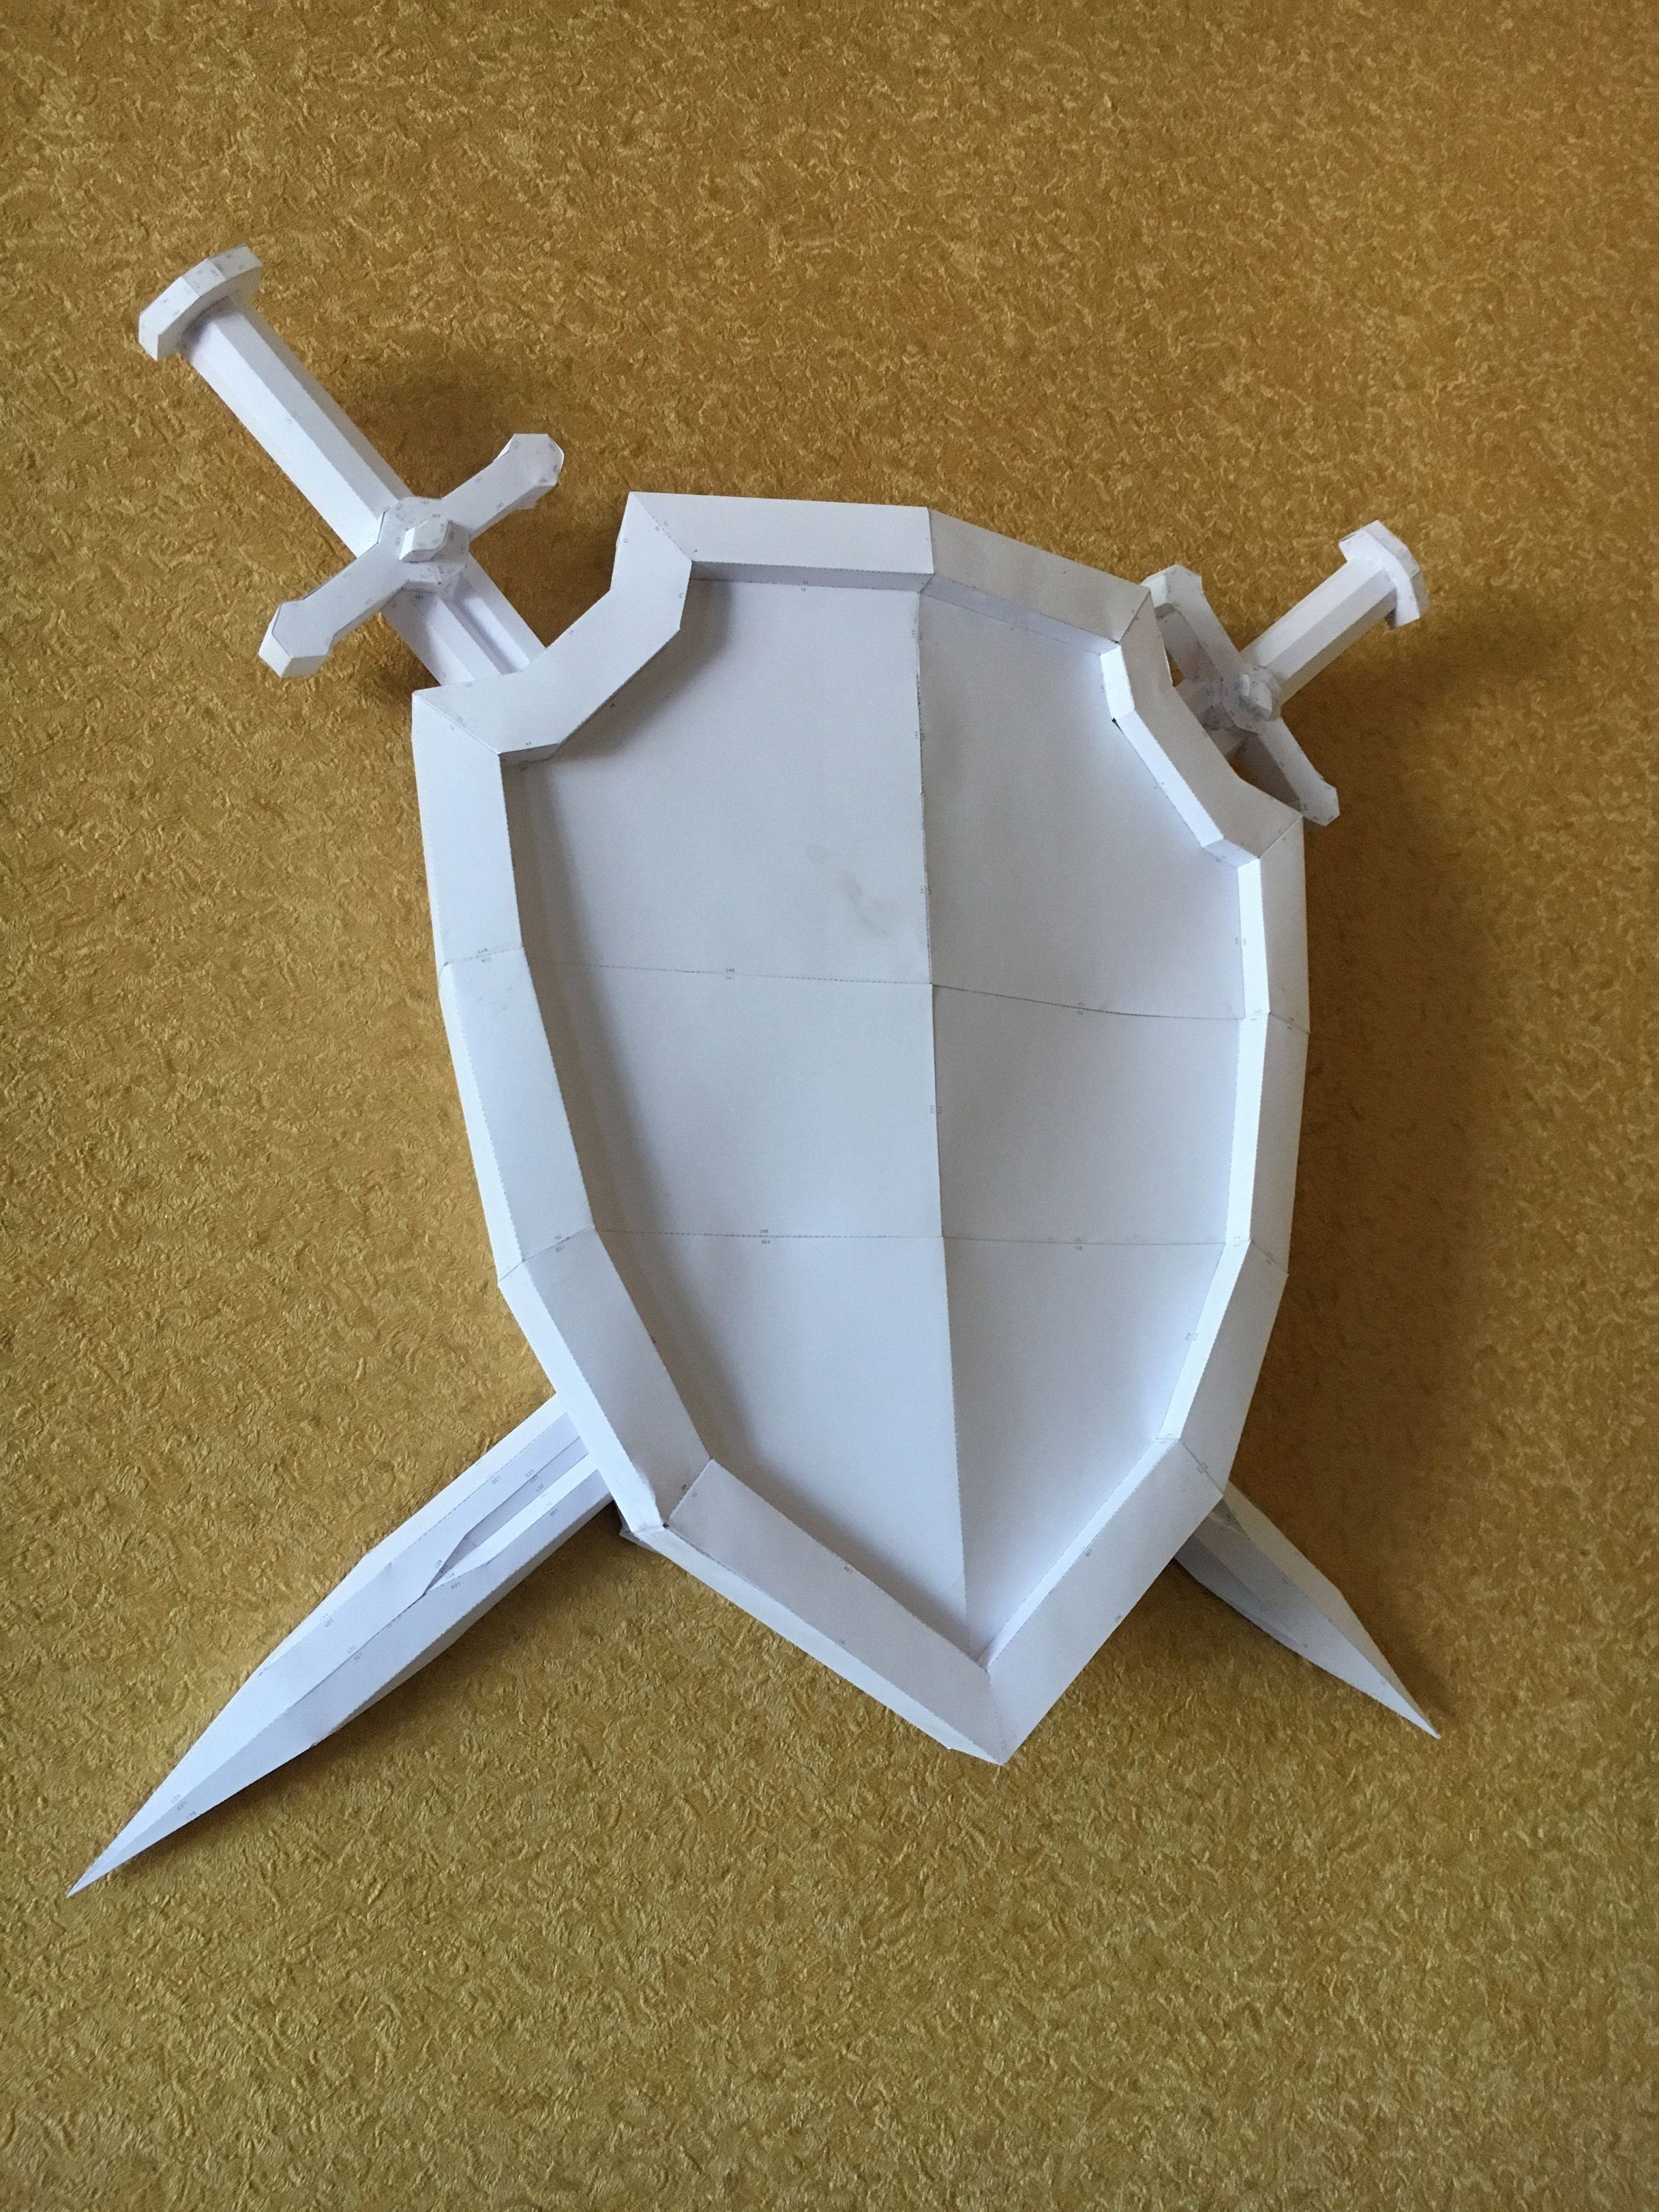 Origami Papercraft Sword Shield Diy Papercraft Model ÐÑÐ¼Ð°Ð¶Ð½ÑÐµ Ð¸Ð·Ð´ÐµÐ Ð¸Ñ